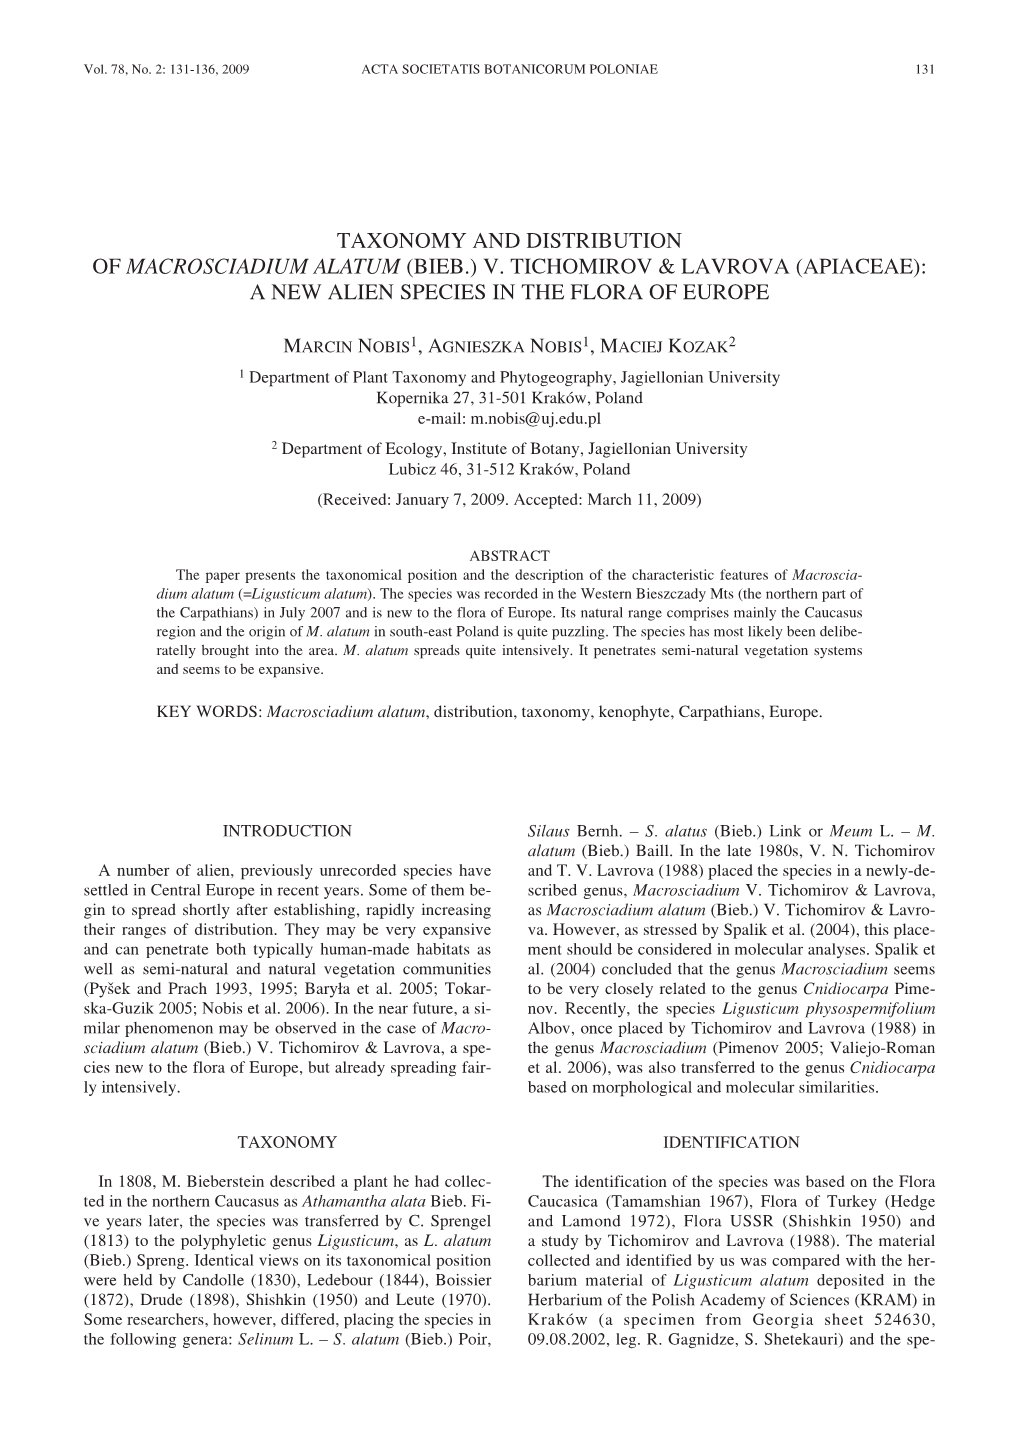 Taxonomy and Distribution of Macrosciadium Alatum (Bieb.) V